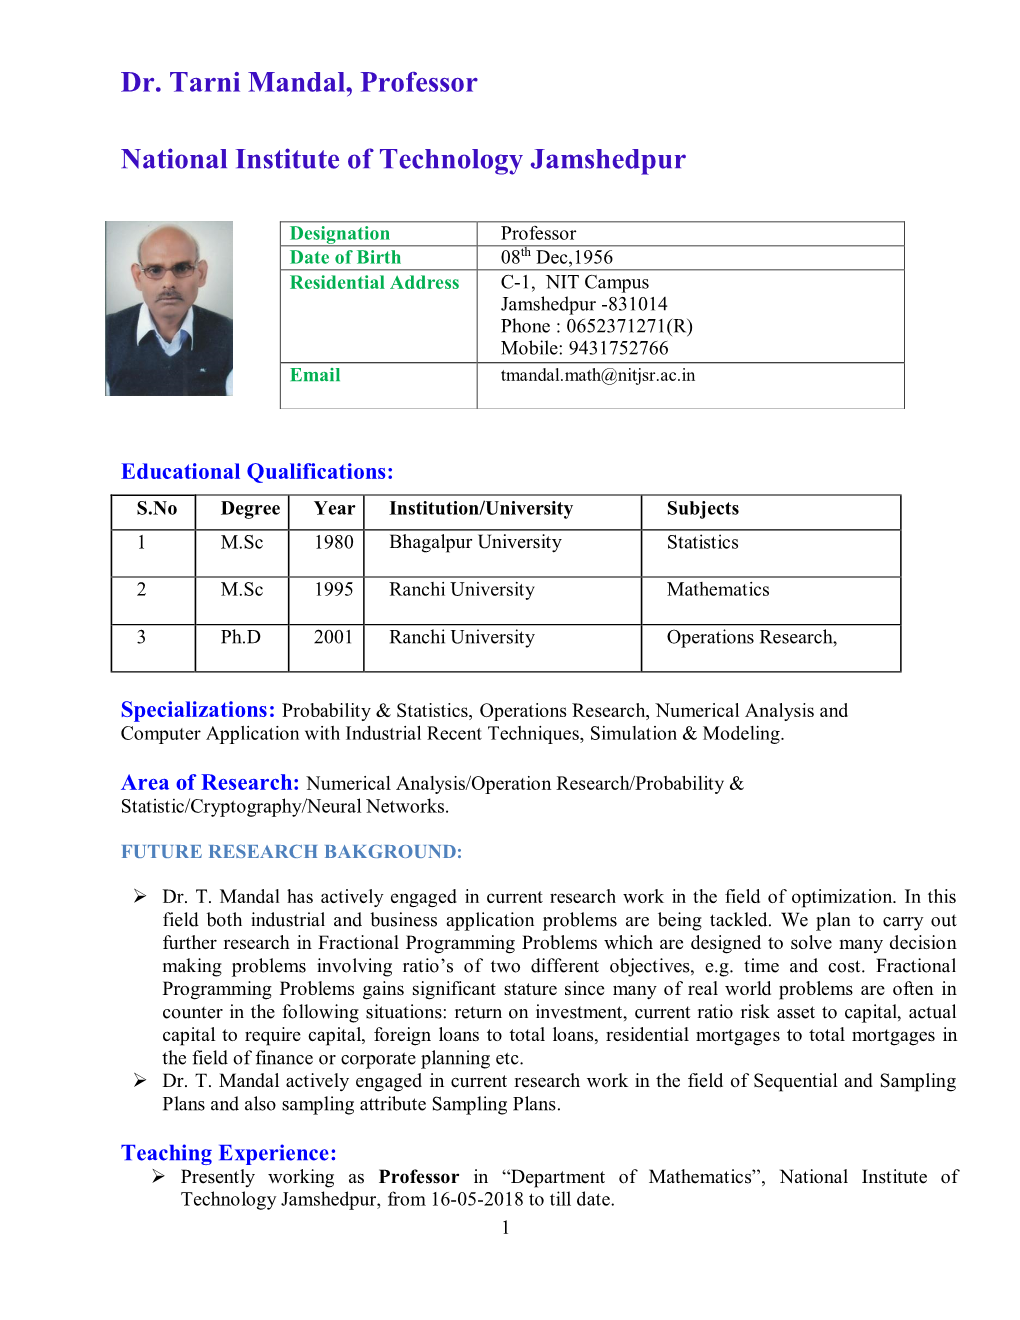 Dr. Tarni Mandal, Professor National Institute of Technology Jamshedpur